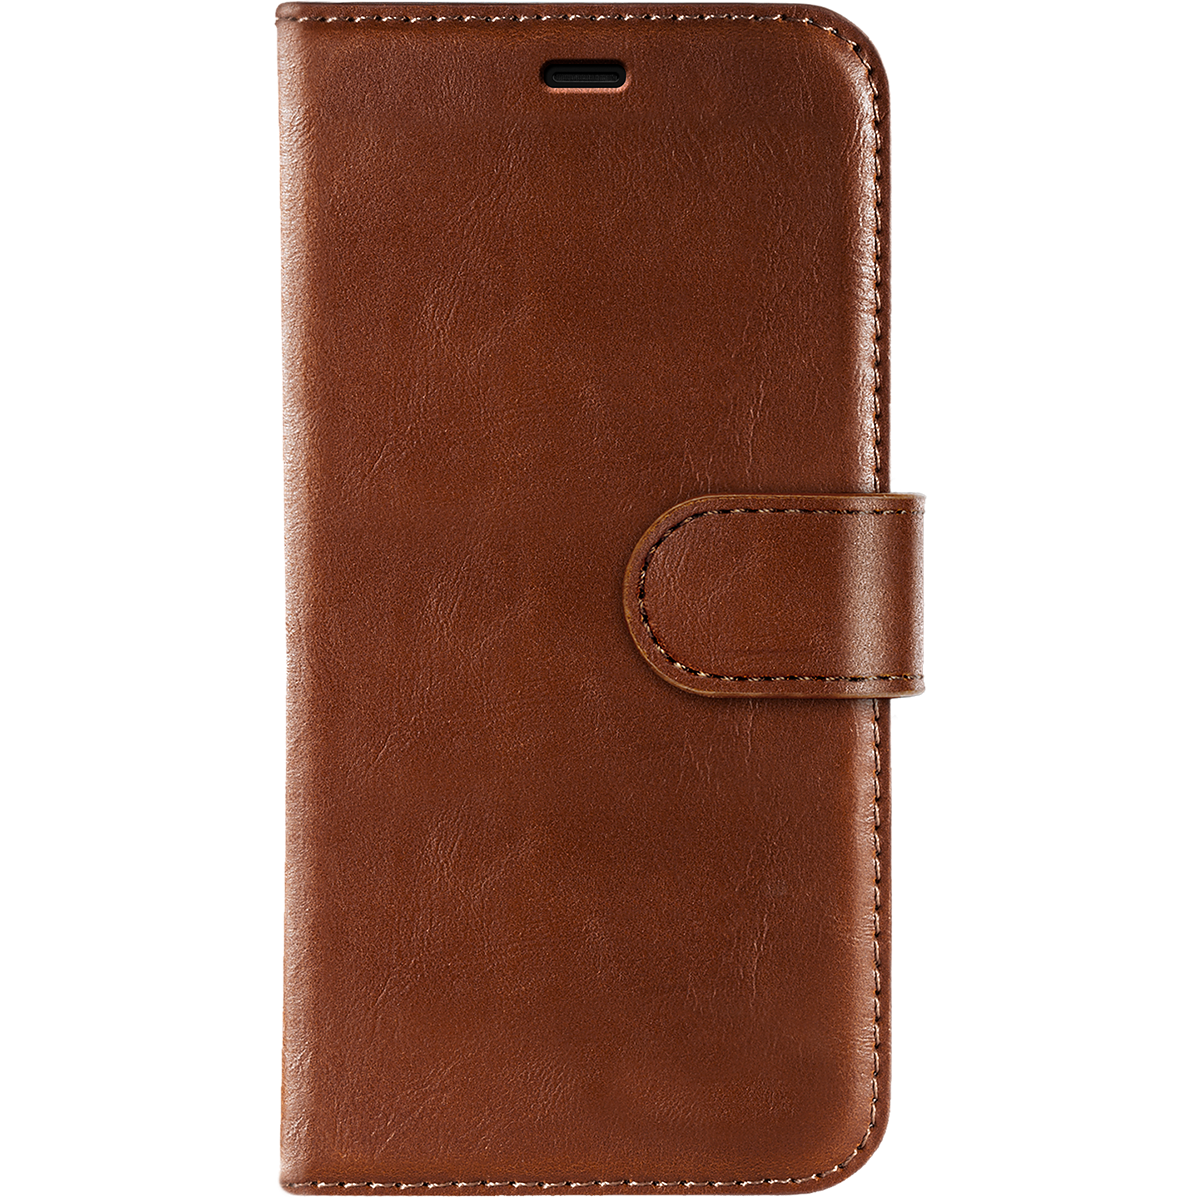 iDeal Magnet Wallet+ Brun, iPhone 11